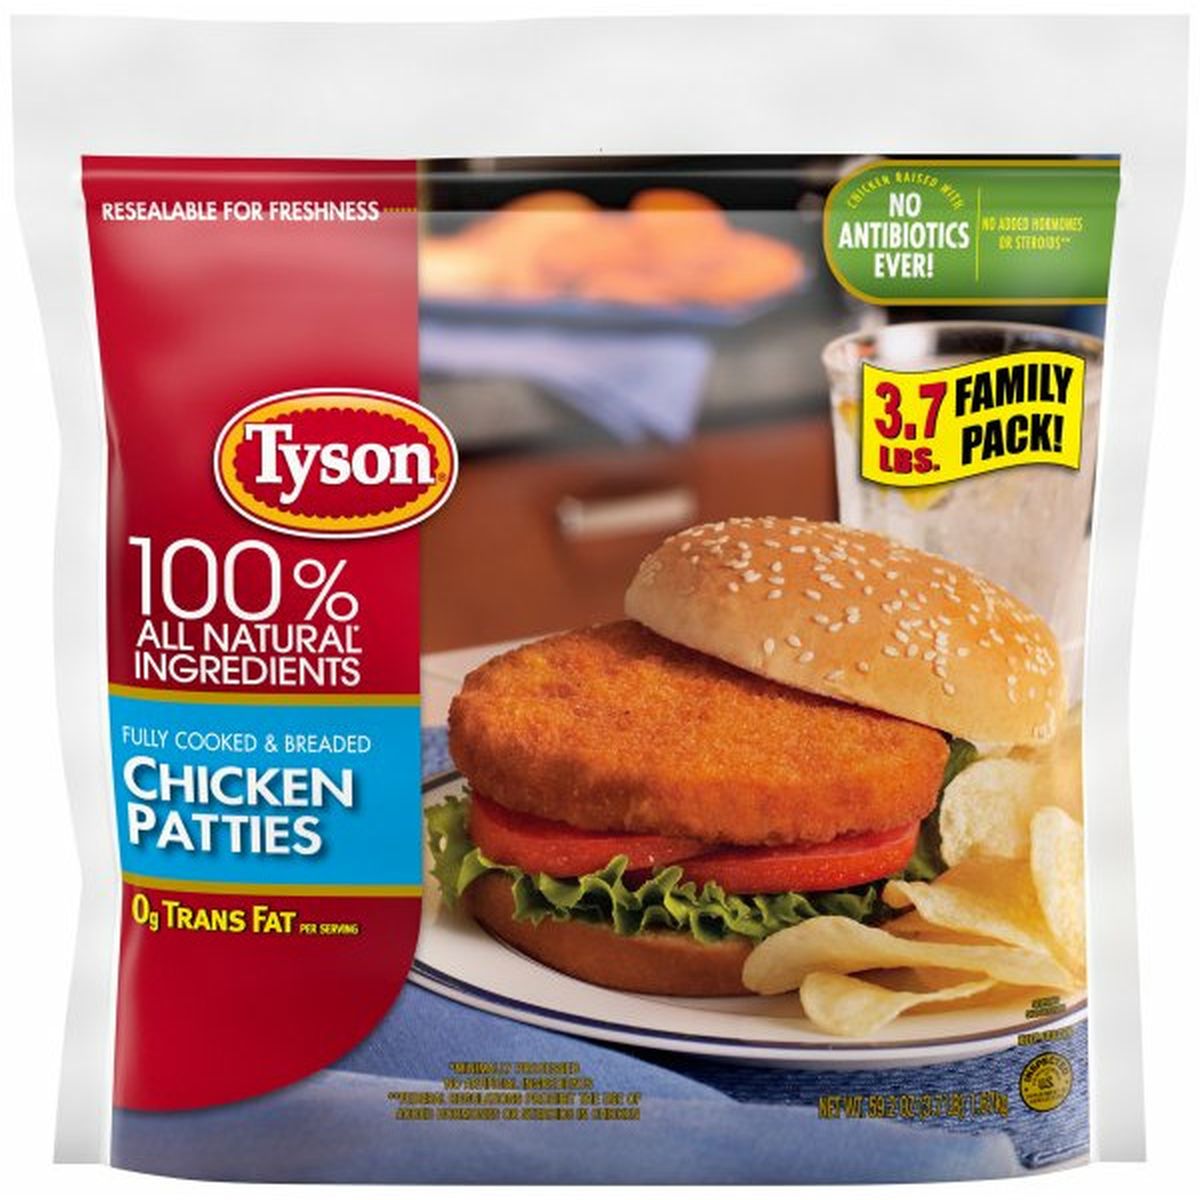 Calories in Tyson Frozen Chicken Patties, Family Pack